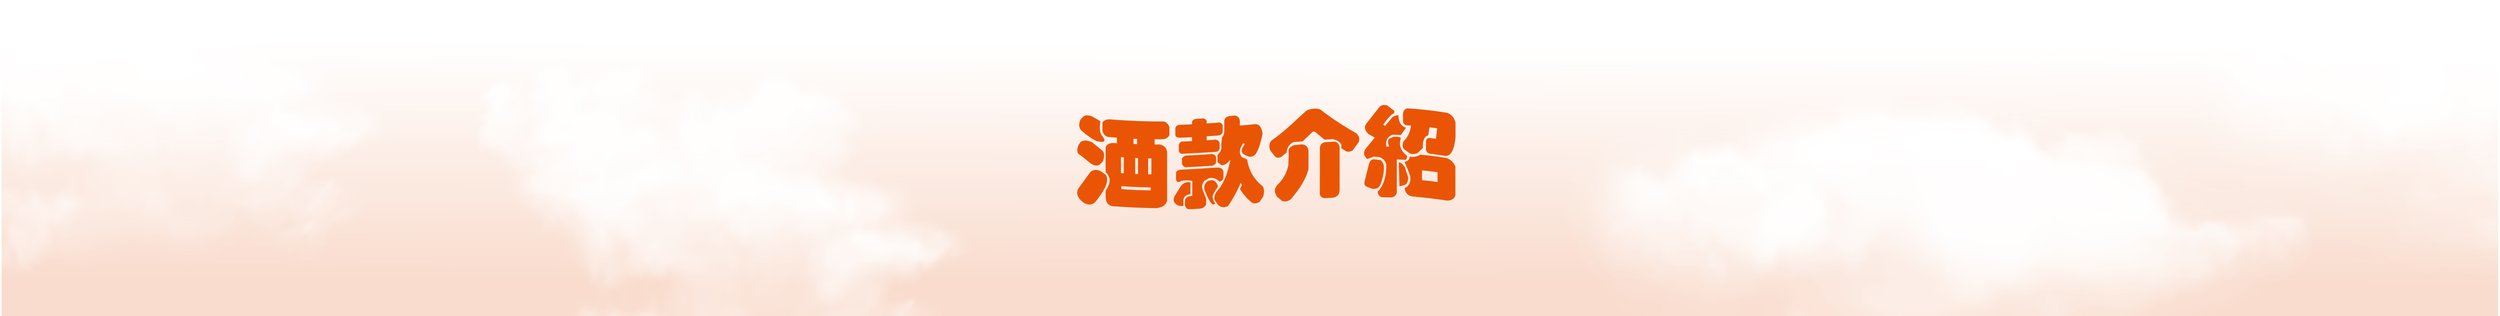 柑橘page-03.jpg